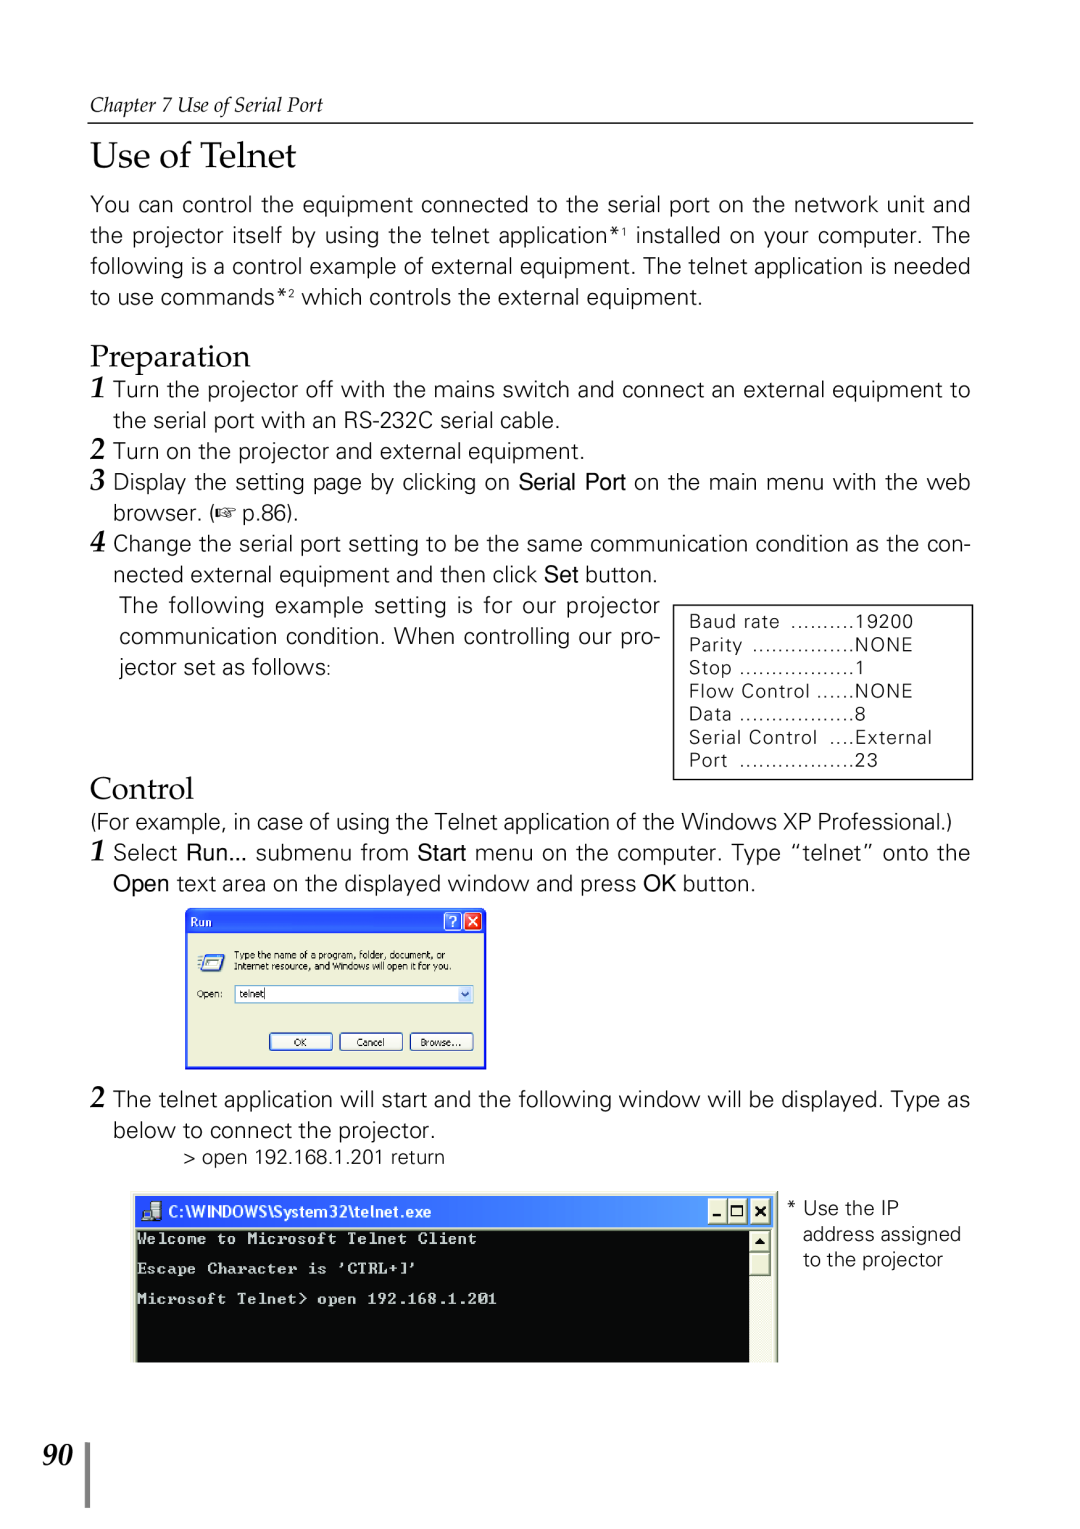 Eiki PjNET-20 owner manual Use of Telnet, Preparation, Control 